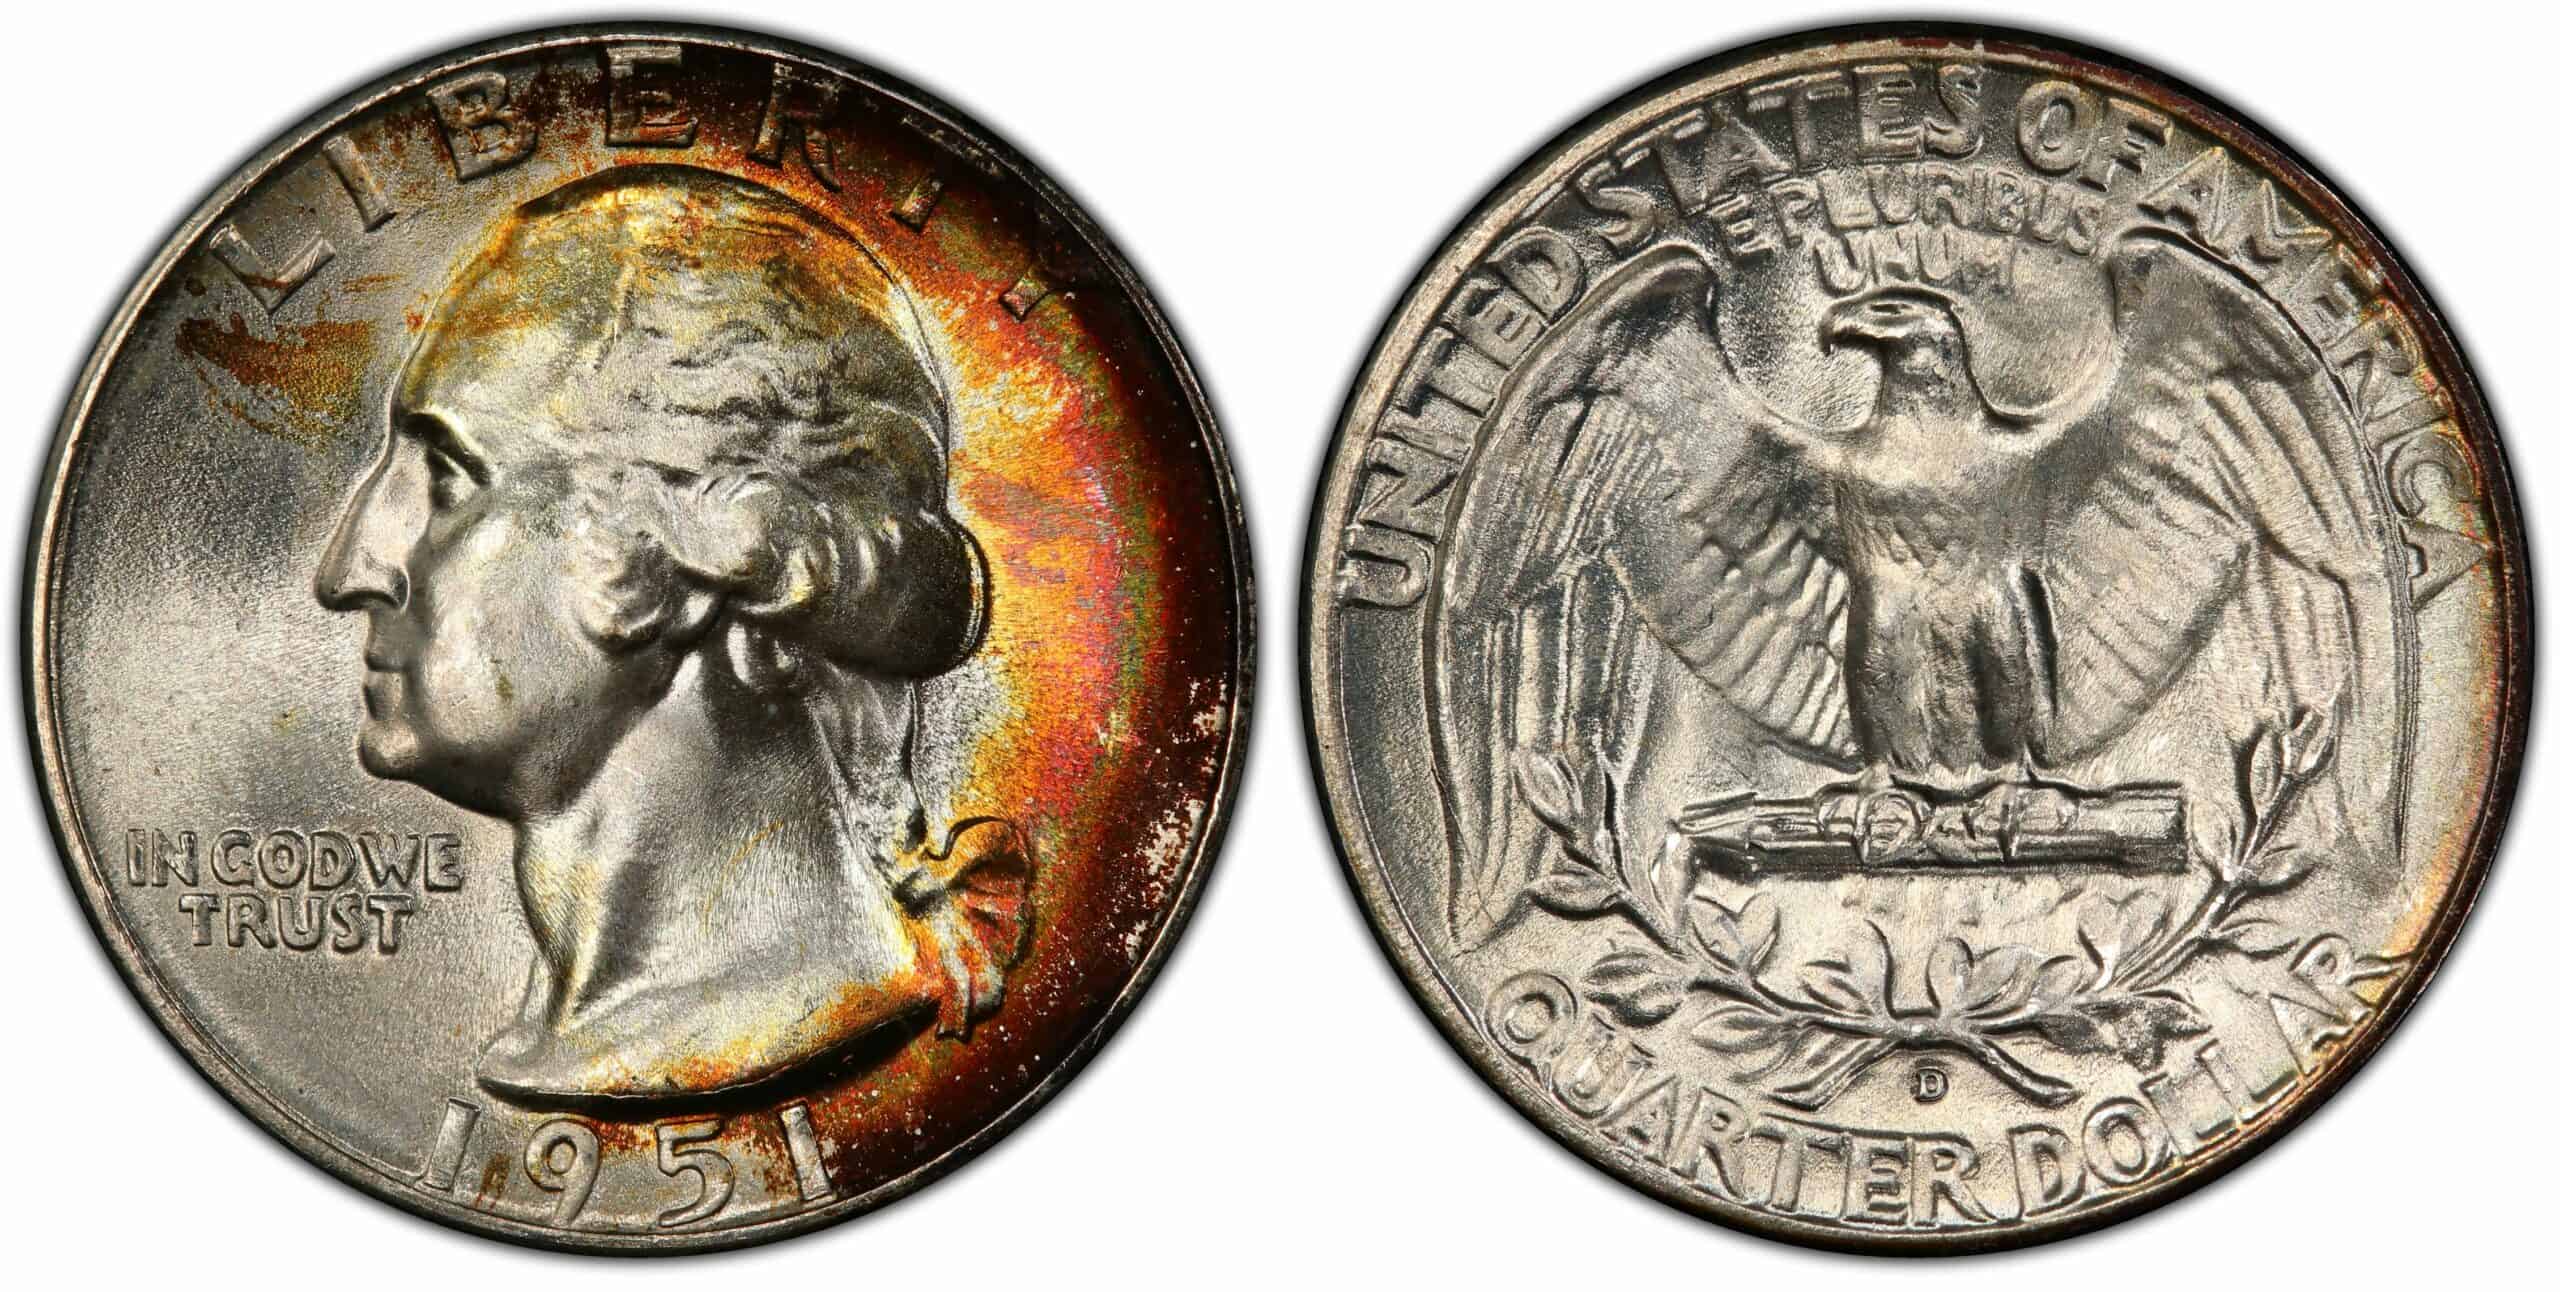 1951 Quarter Value are “D”, “S”, No mint mark worth money